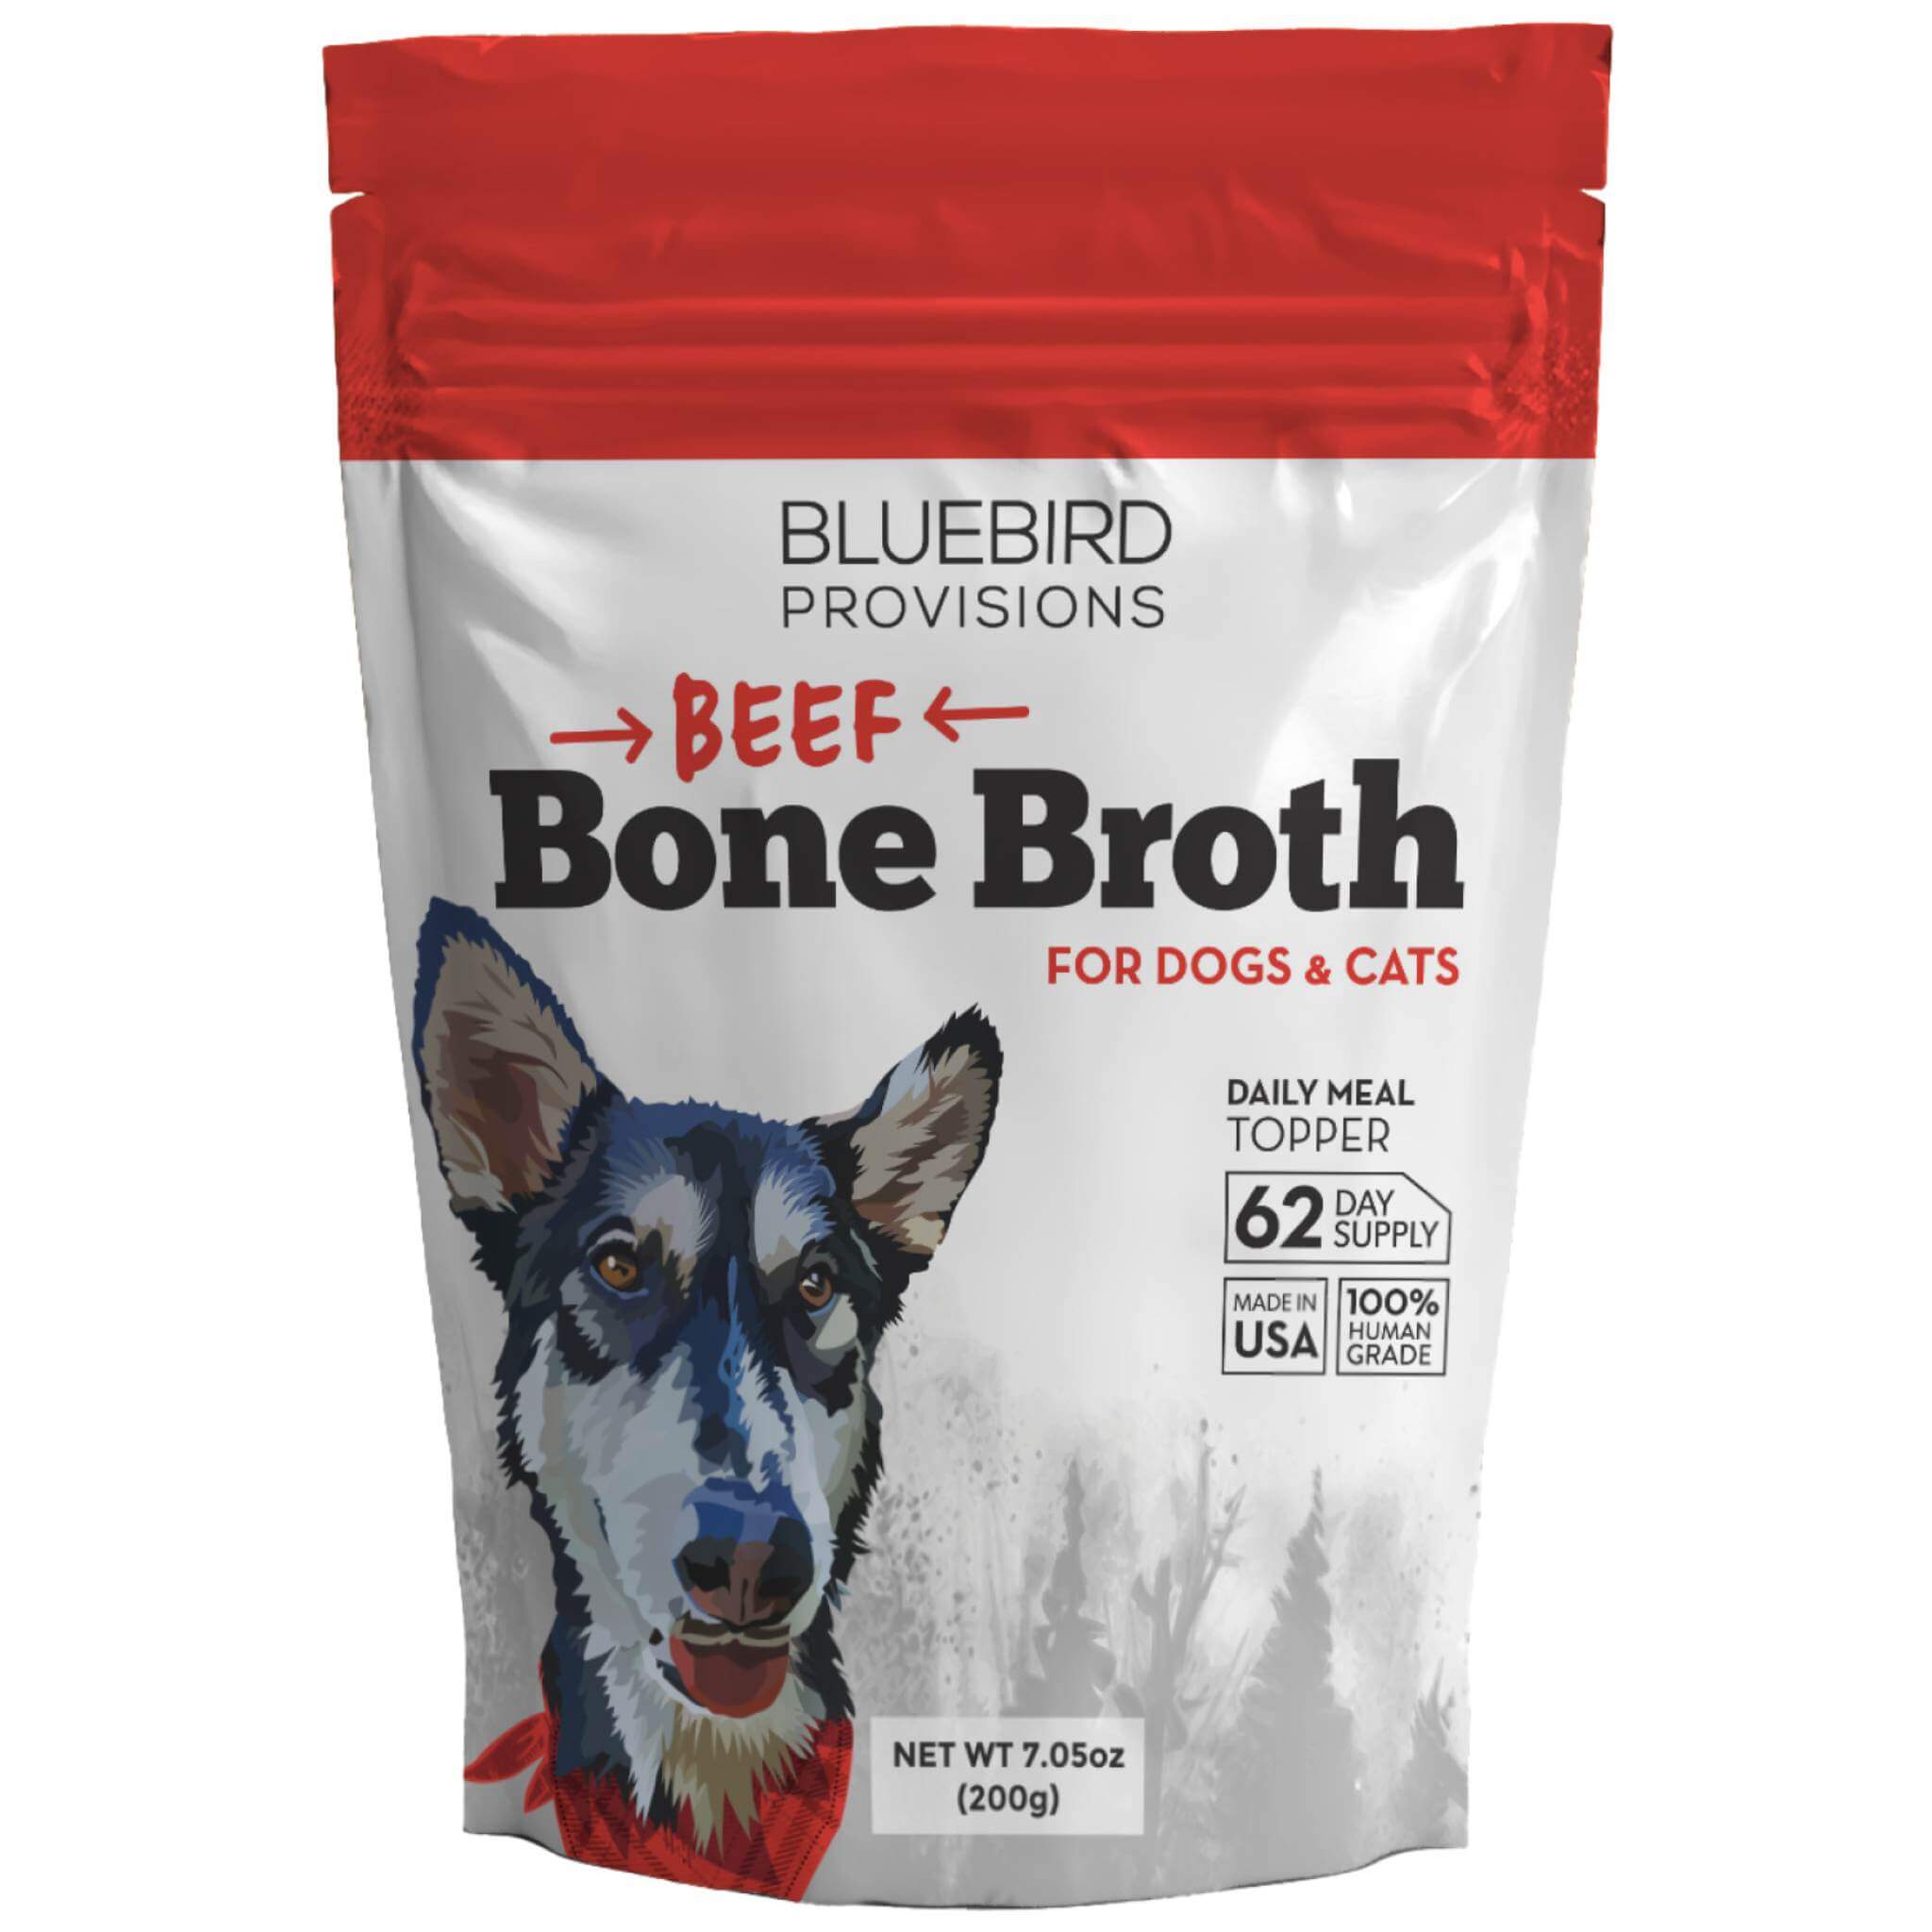 Bluebird beef bone broth for dogs